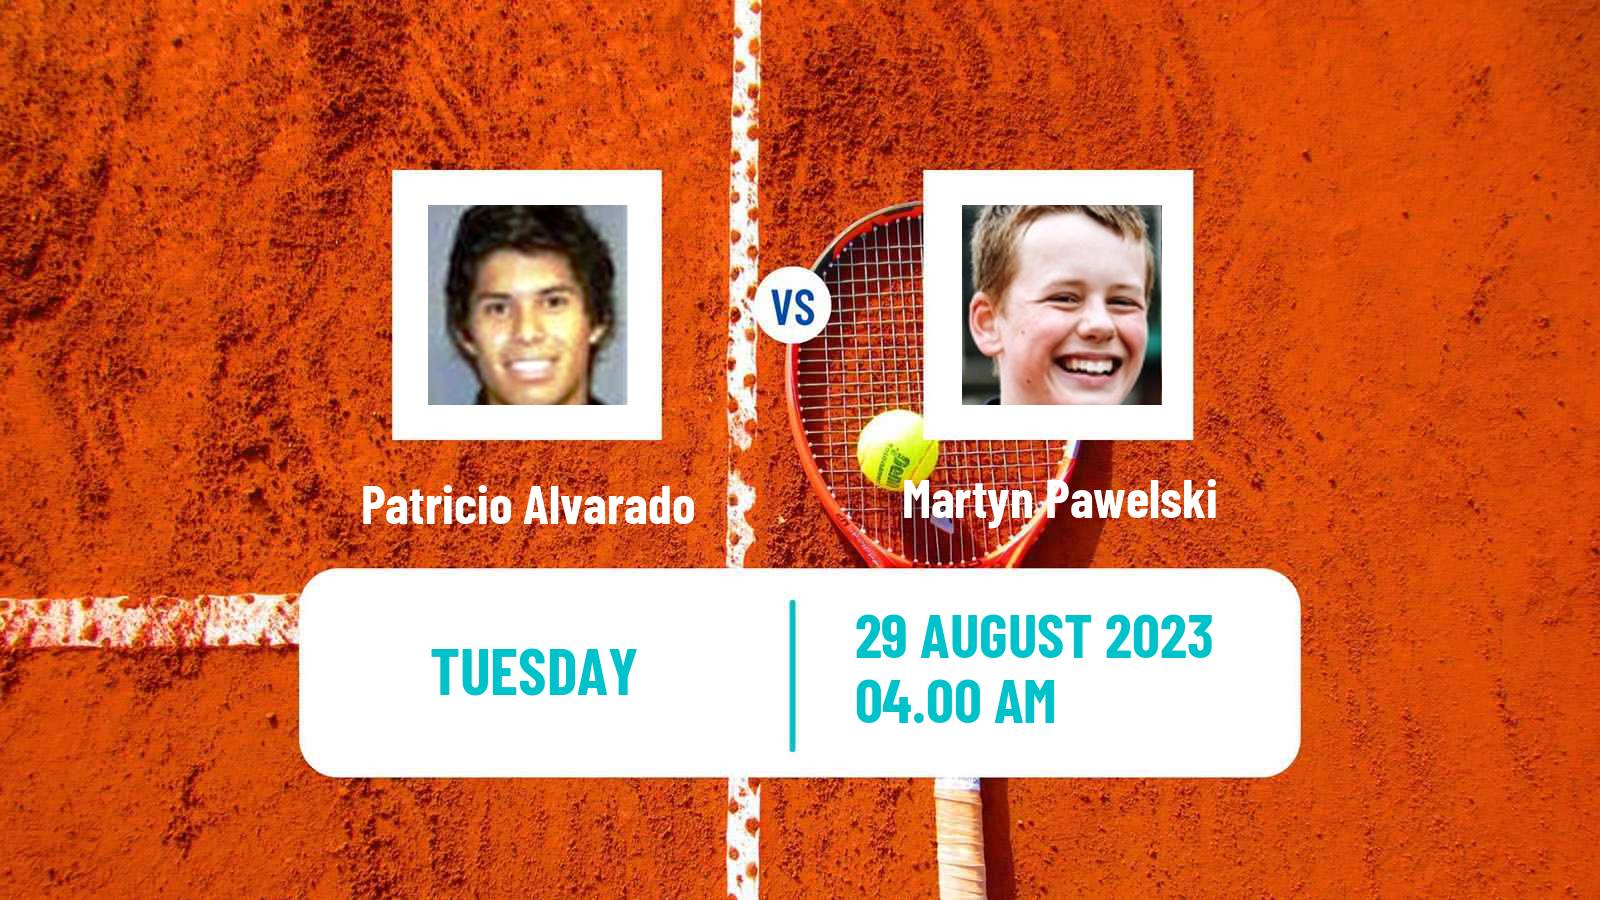 Tennis ITF M25 Idanha A Nova 2 Men Patricio Alvarado - Martyn Pawelski